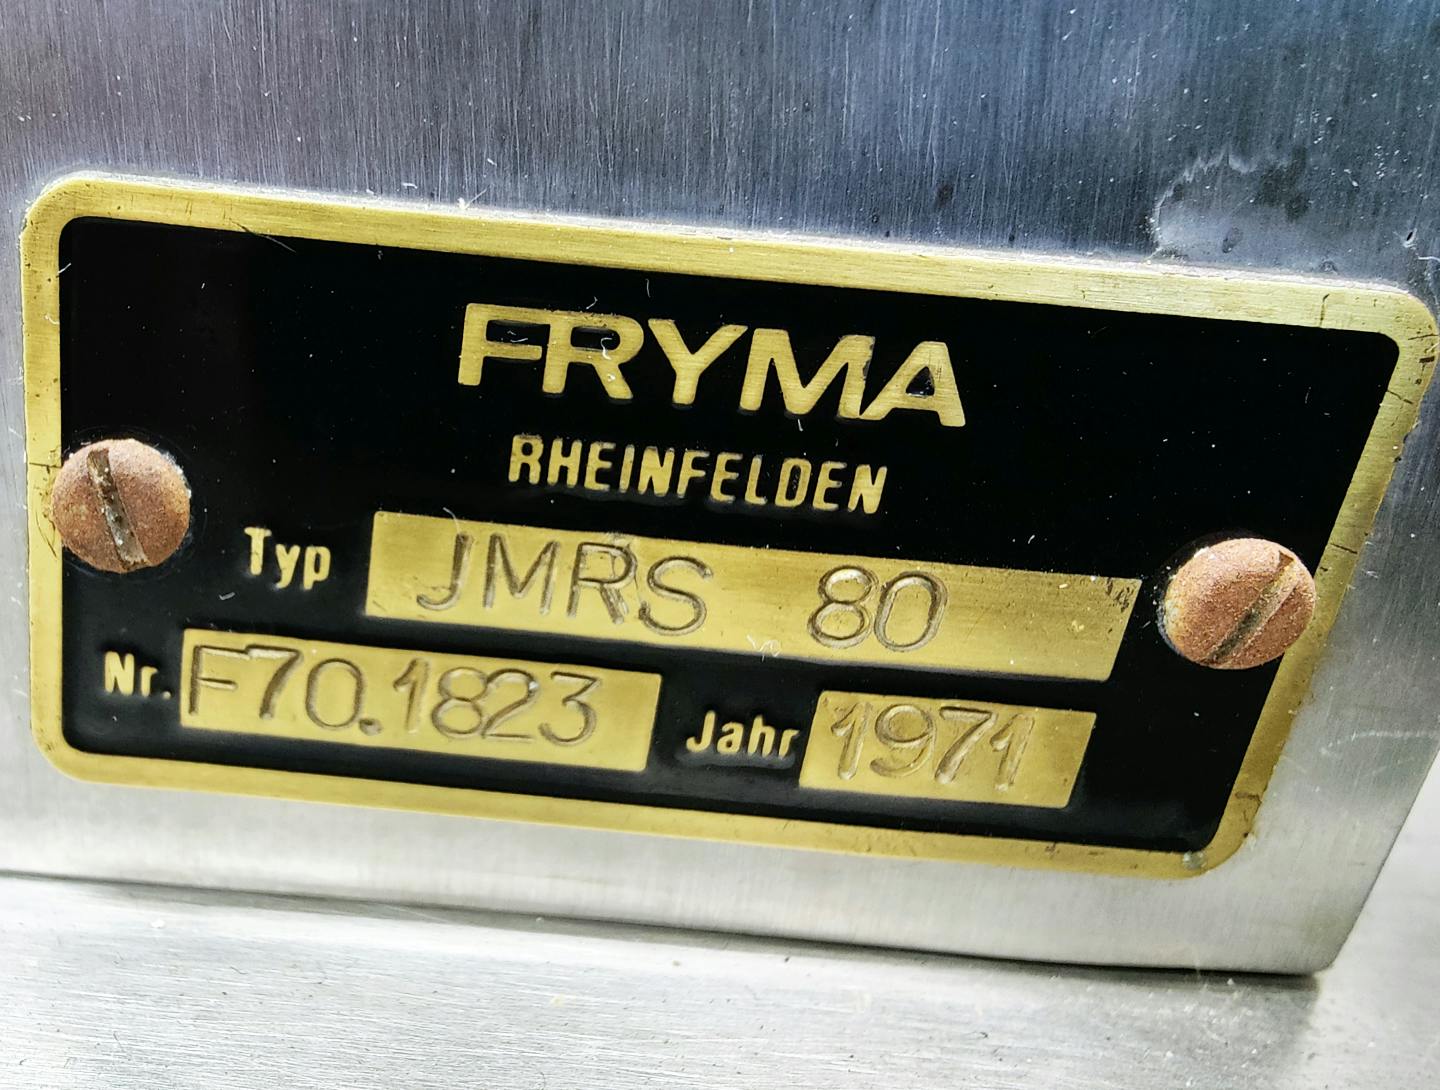 Fryma JMRS 80 - Luchtstraalmolen - image 6